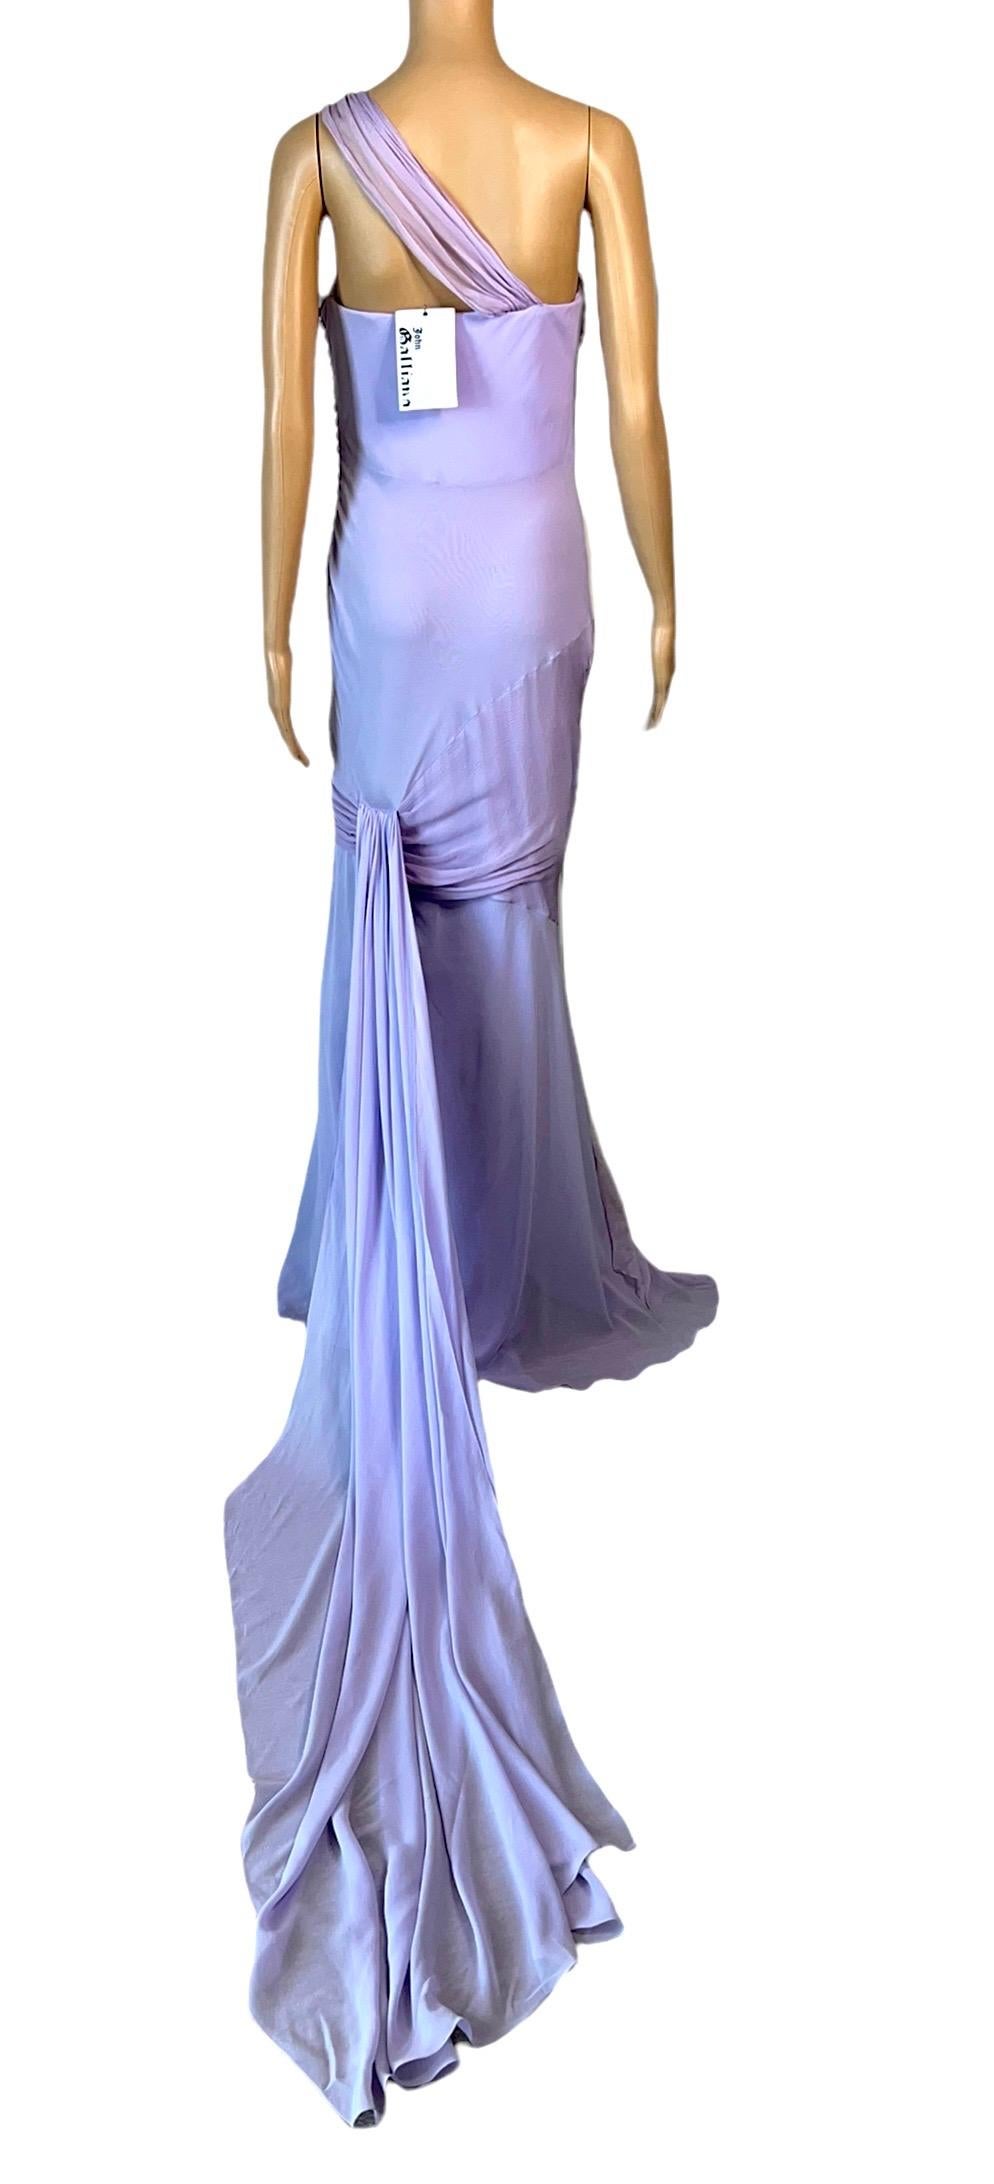 Women's or Men's John Galliano S/S 2005 Unworn Bustier Bias Cut Silk Train Evening Dress Gown For Sale